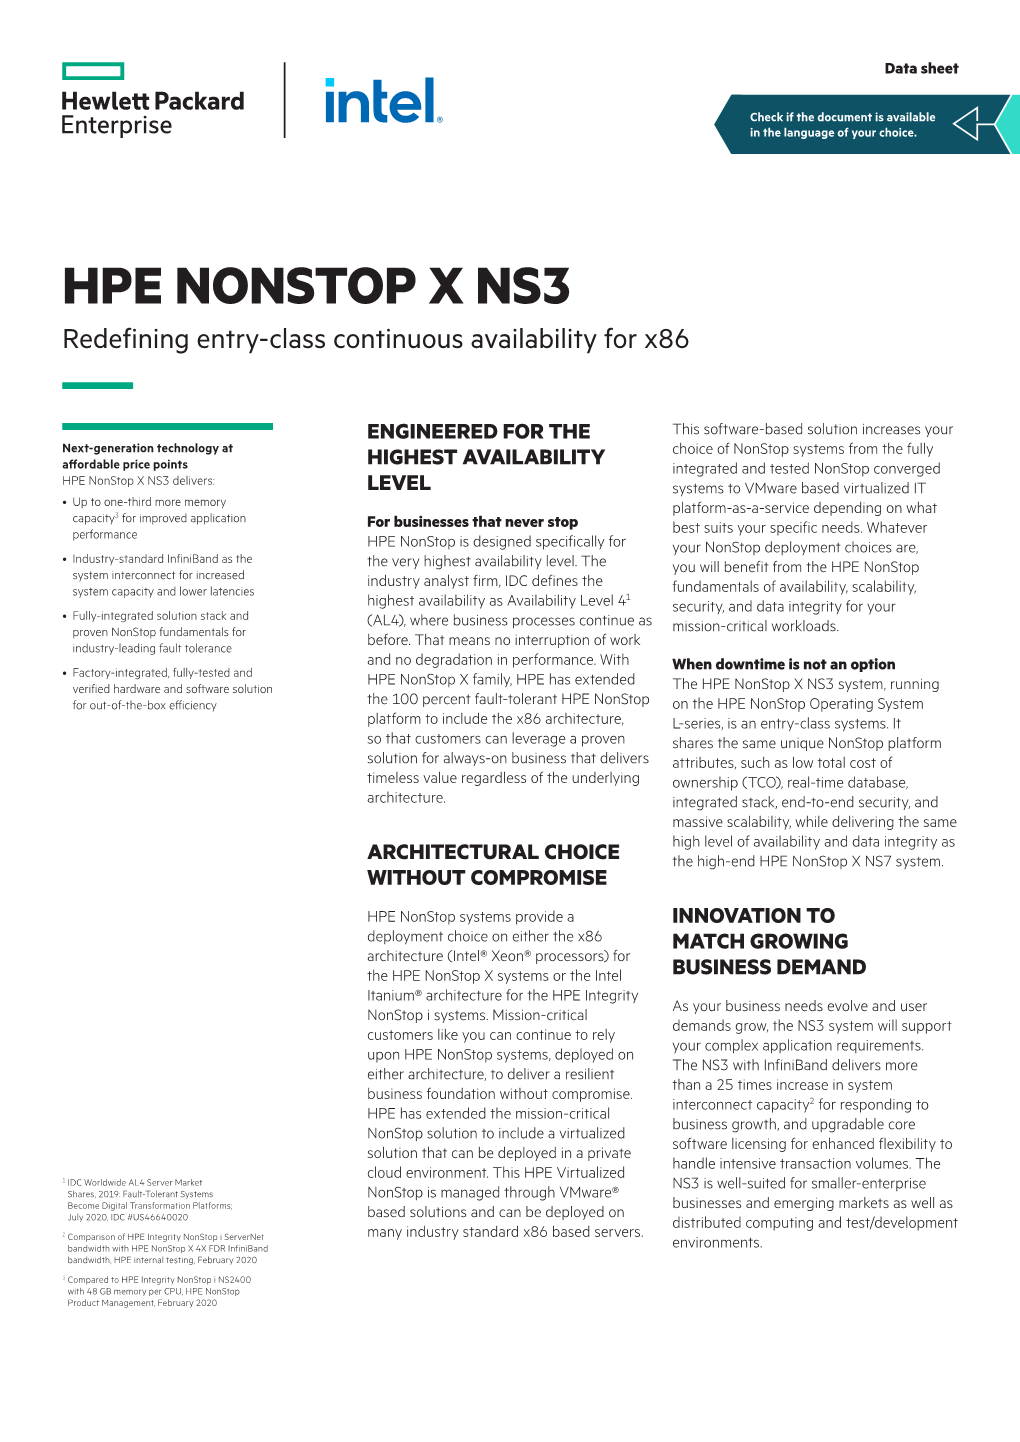 HPE Nonstop X NS3 Data Sheet